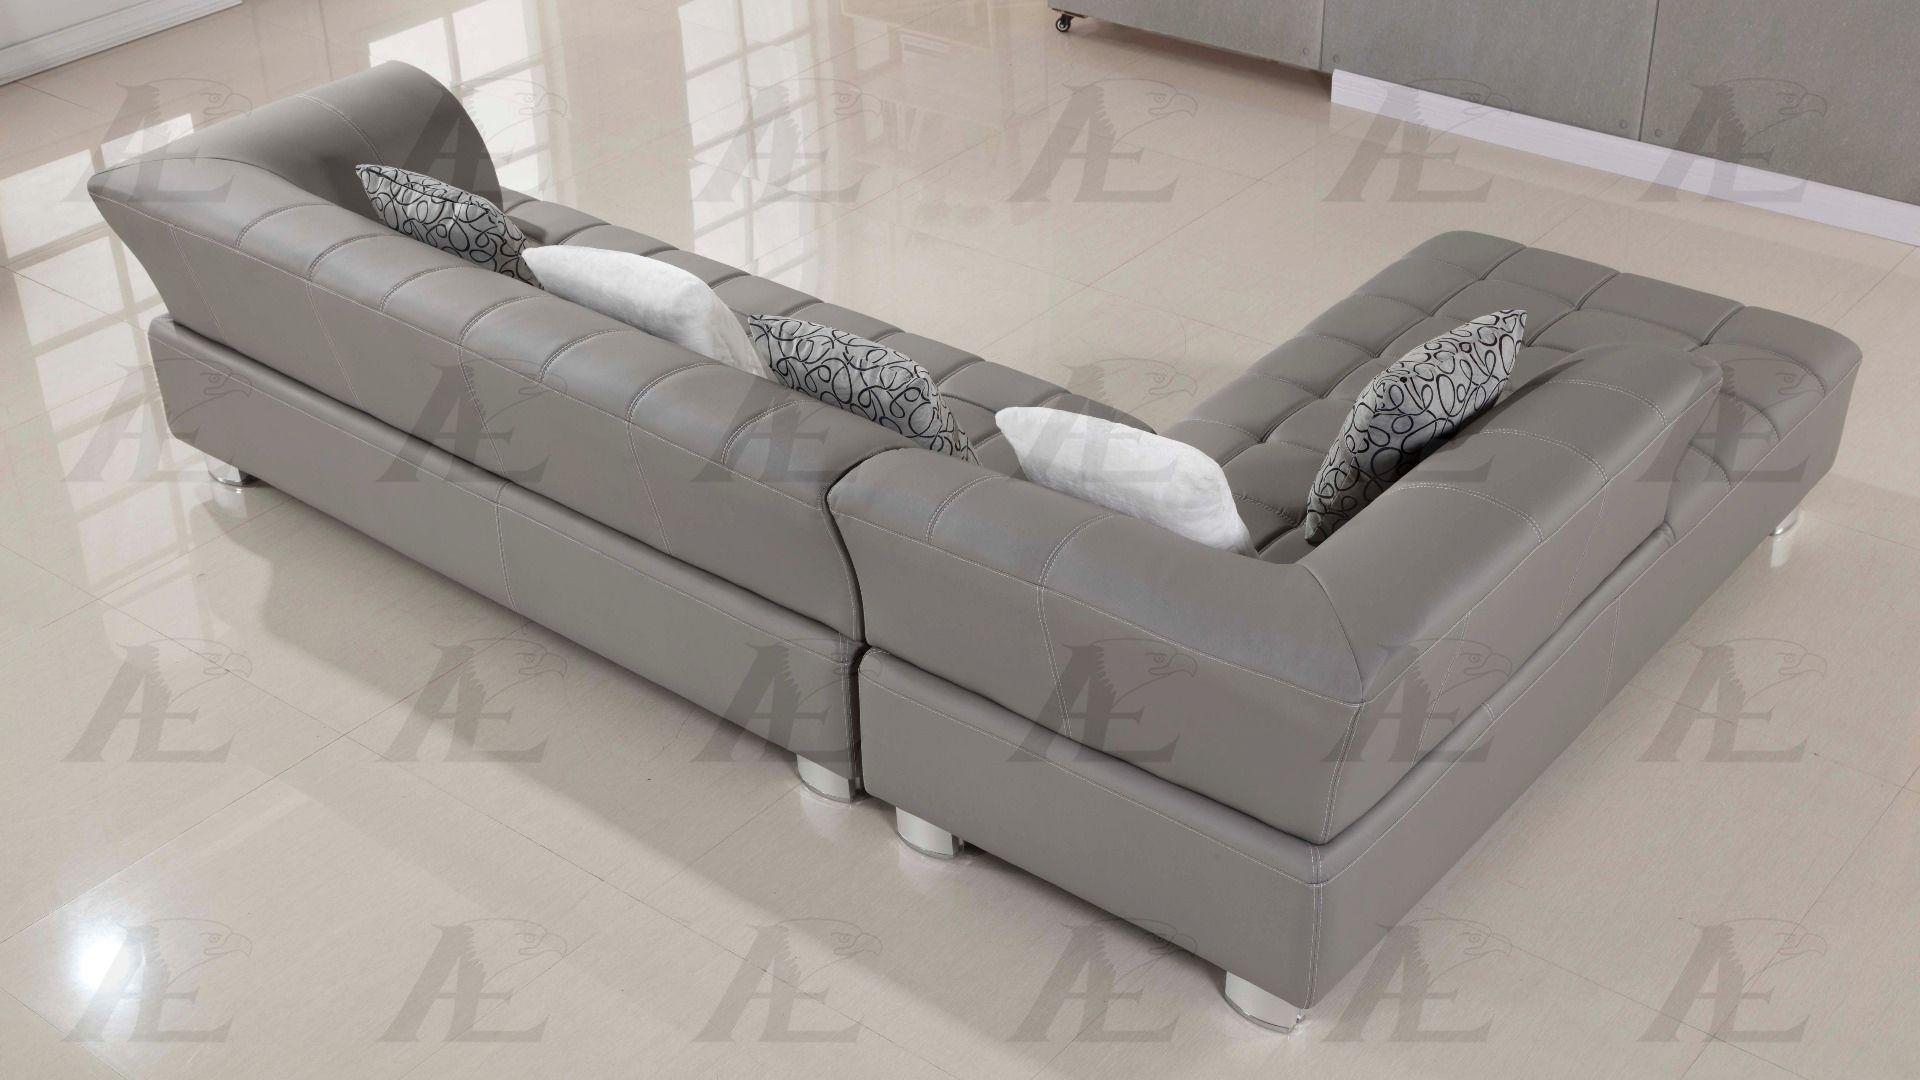 

    
AE-L138L-GR American Eagle Furniture Sectional Sofa Set
